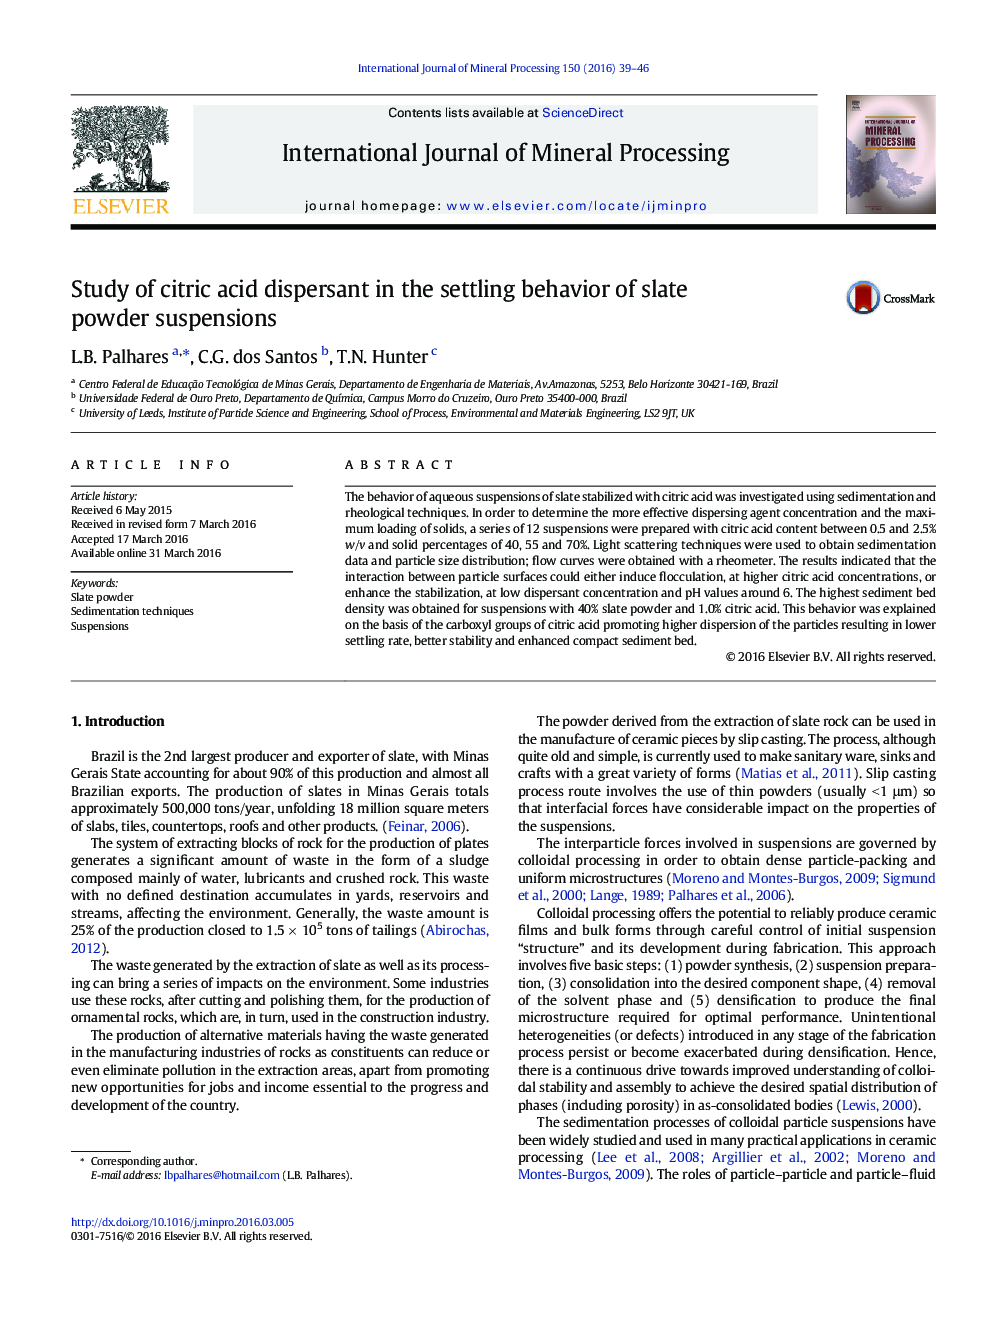 Study of citric acid dispersant in the settling behavior of slate powder suspensions